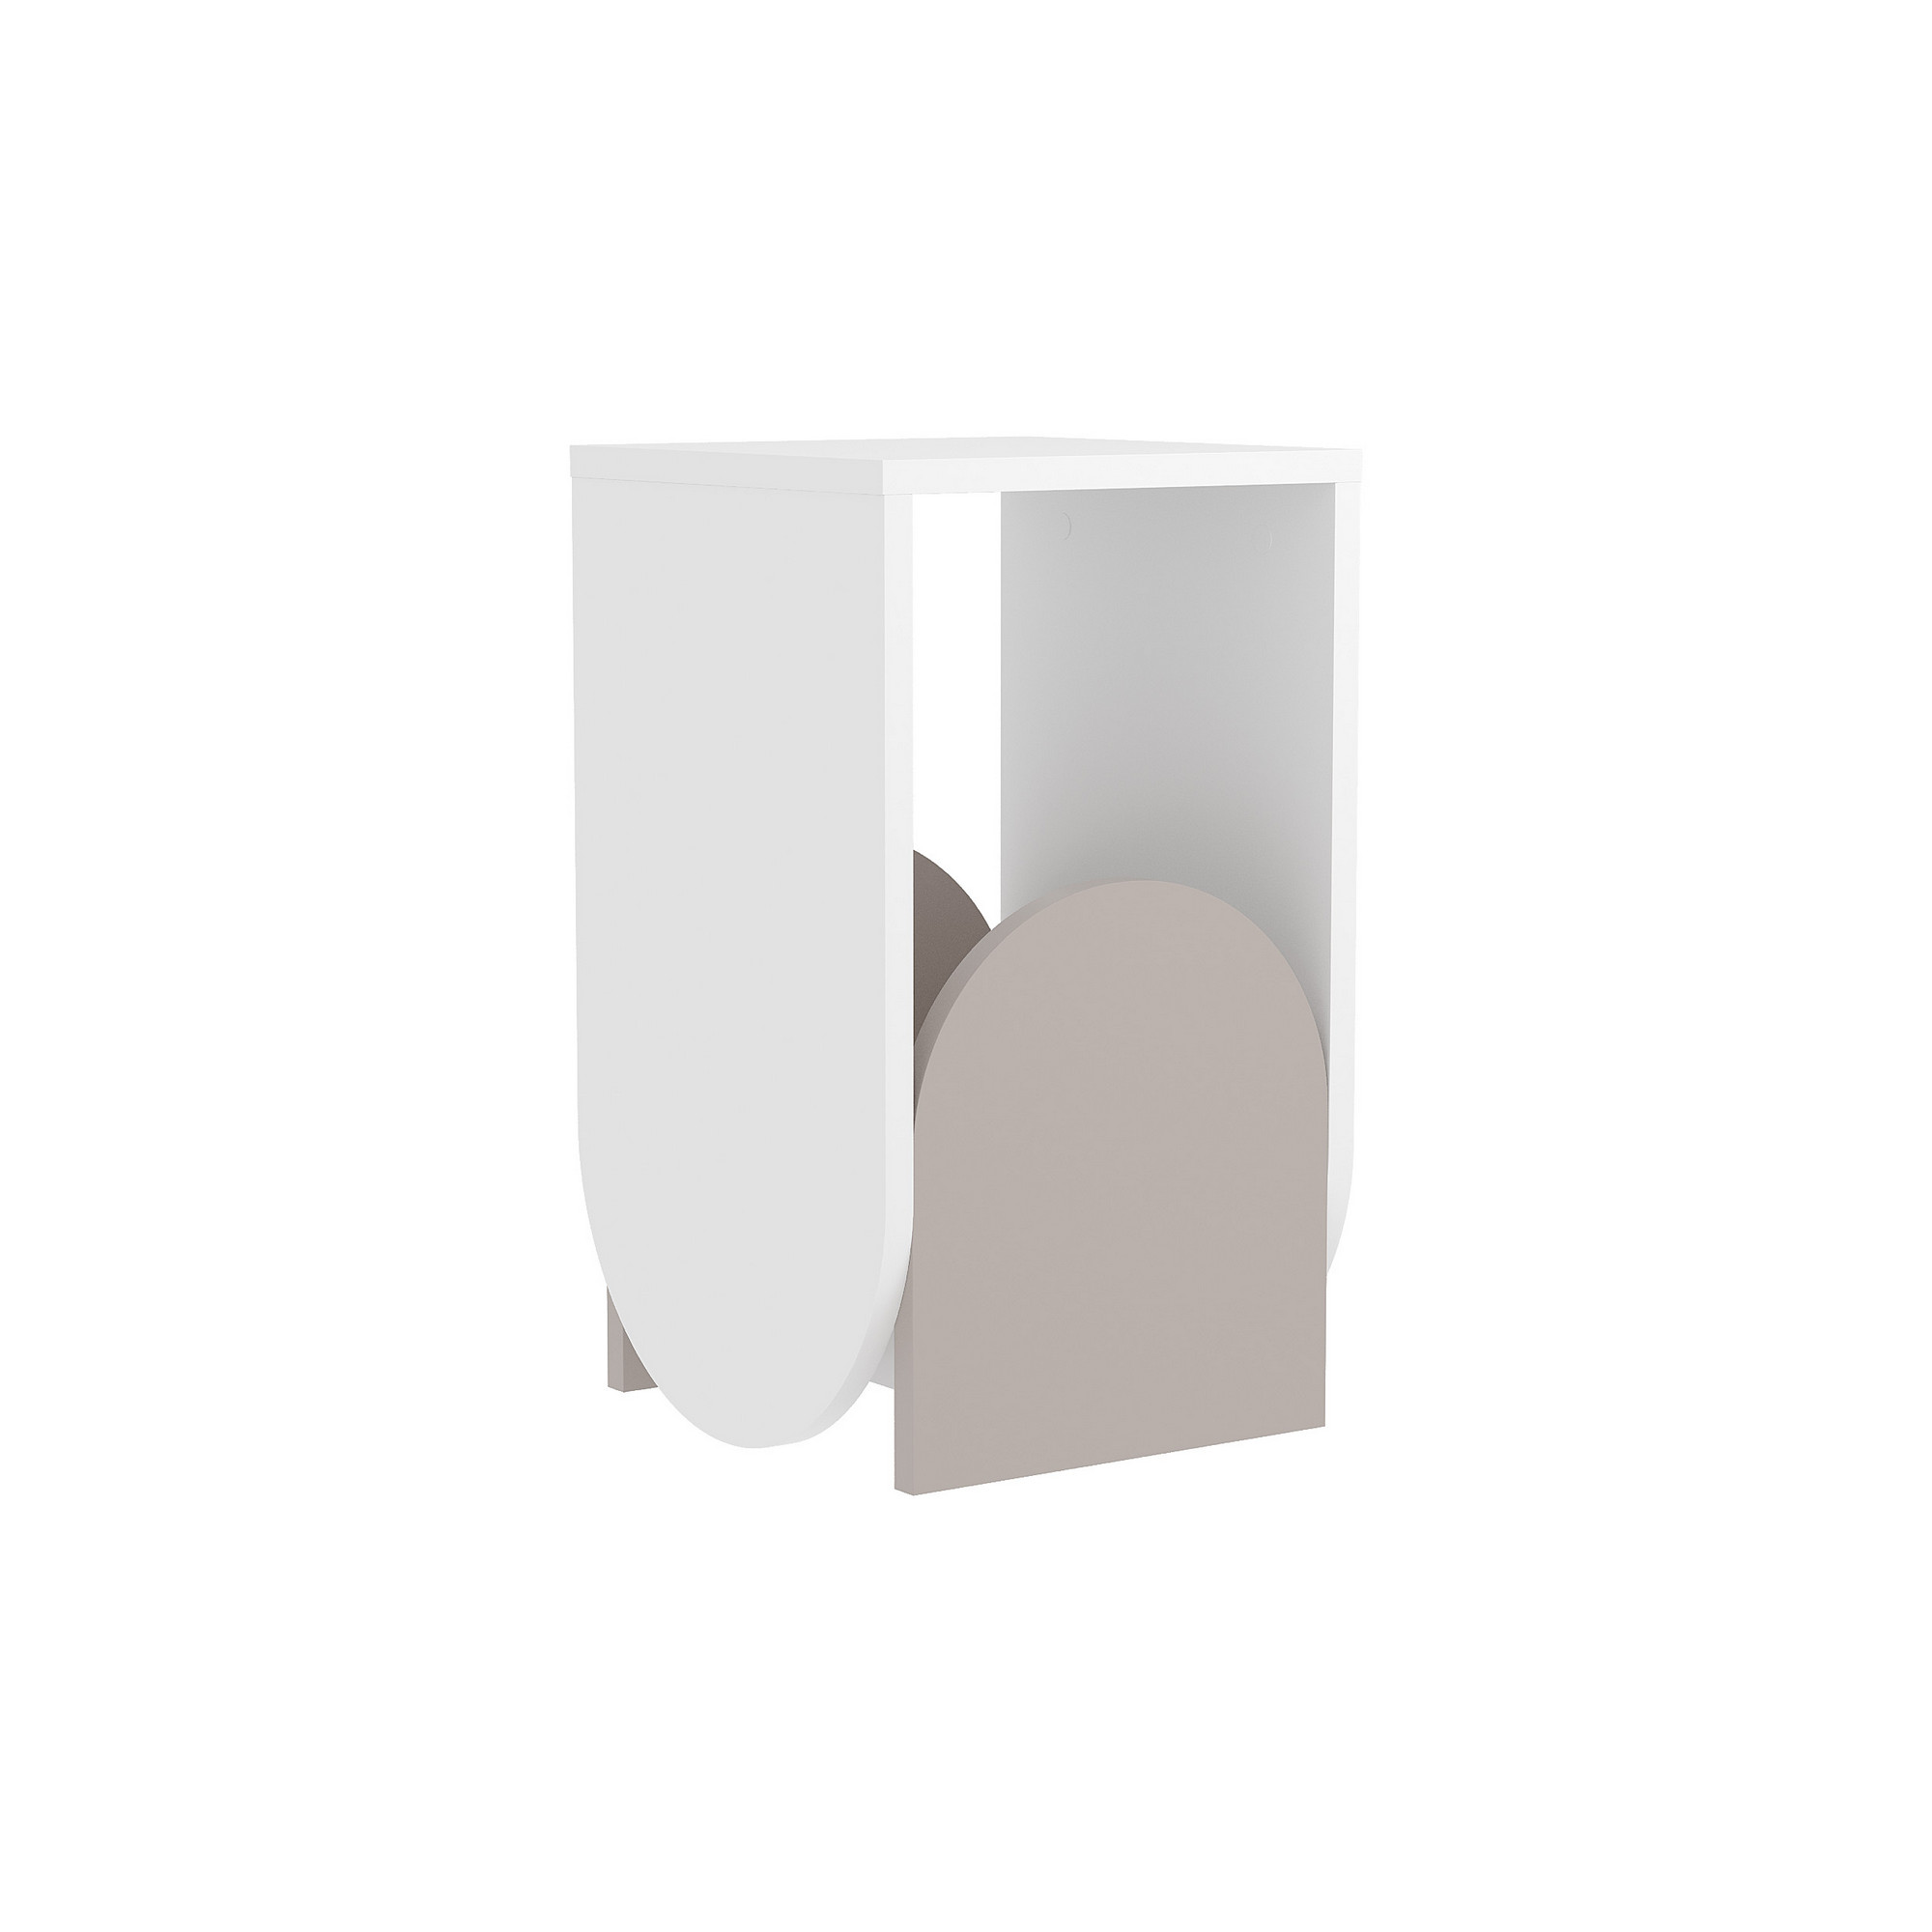 NORDVÄRK Nun sidebord, kvadratisk - hvid og lys mokka melamin (32x32)